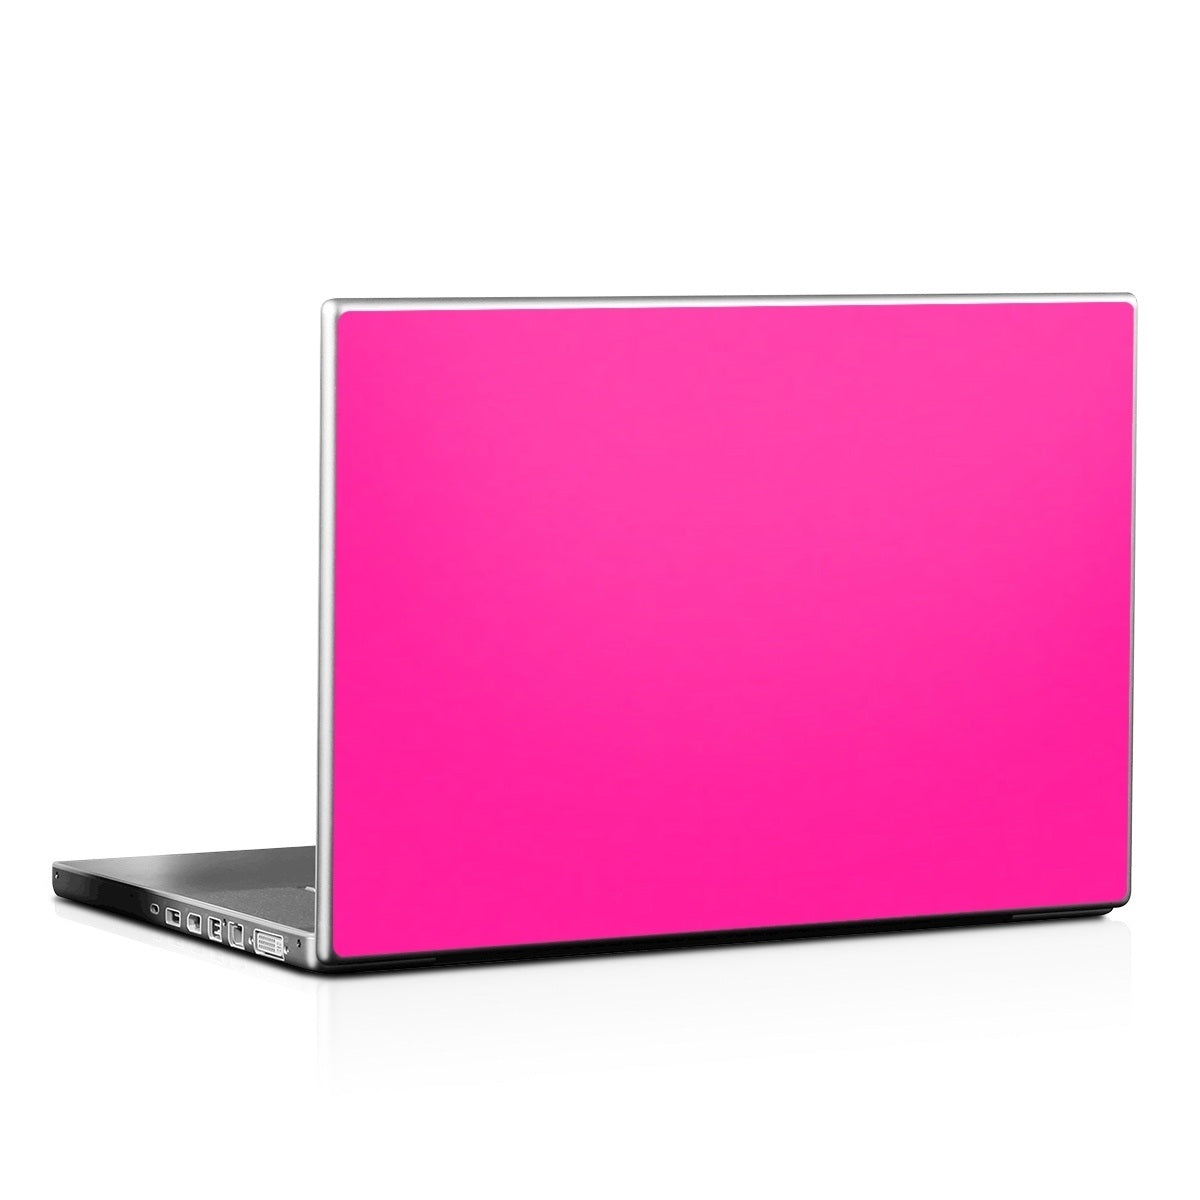 Solid State Malibu Pink - Laptop Lid Skin